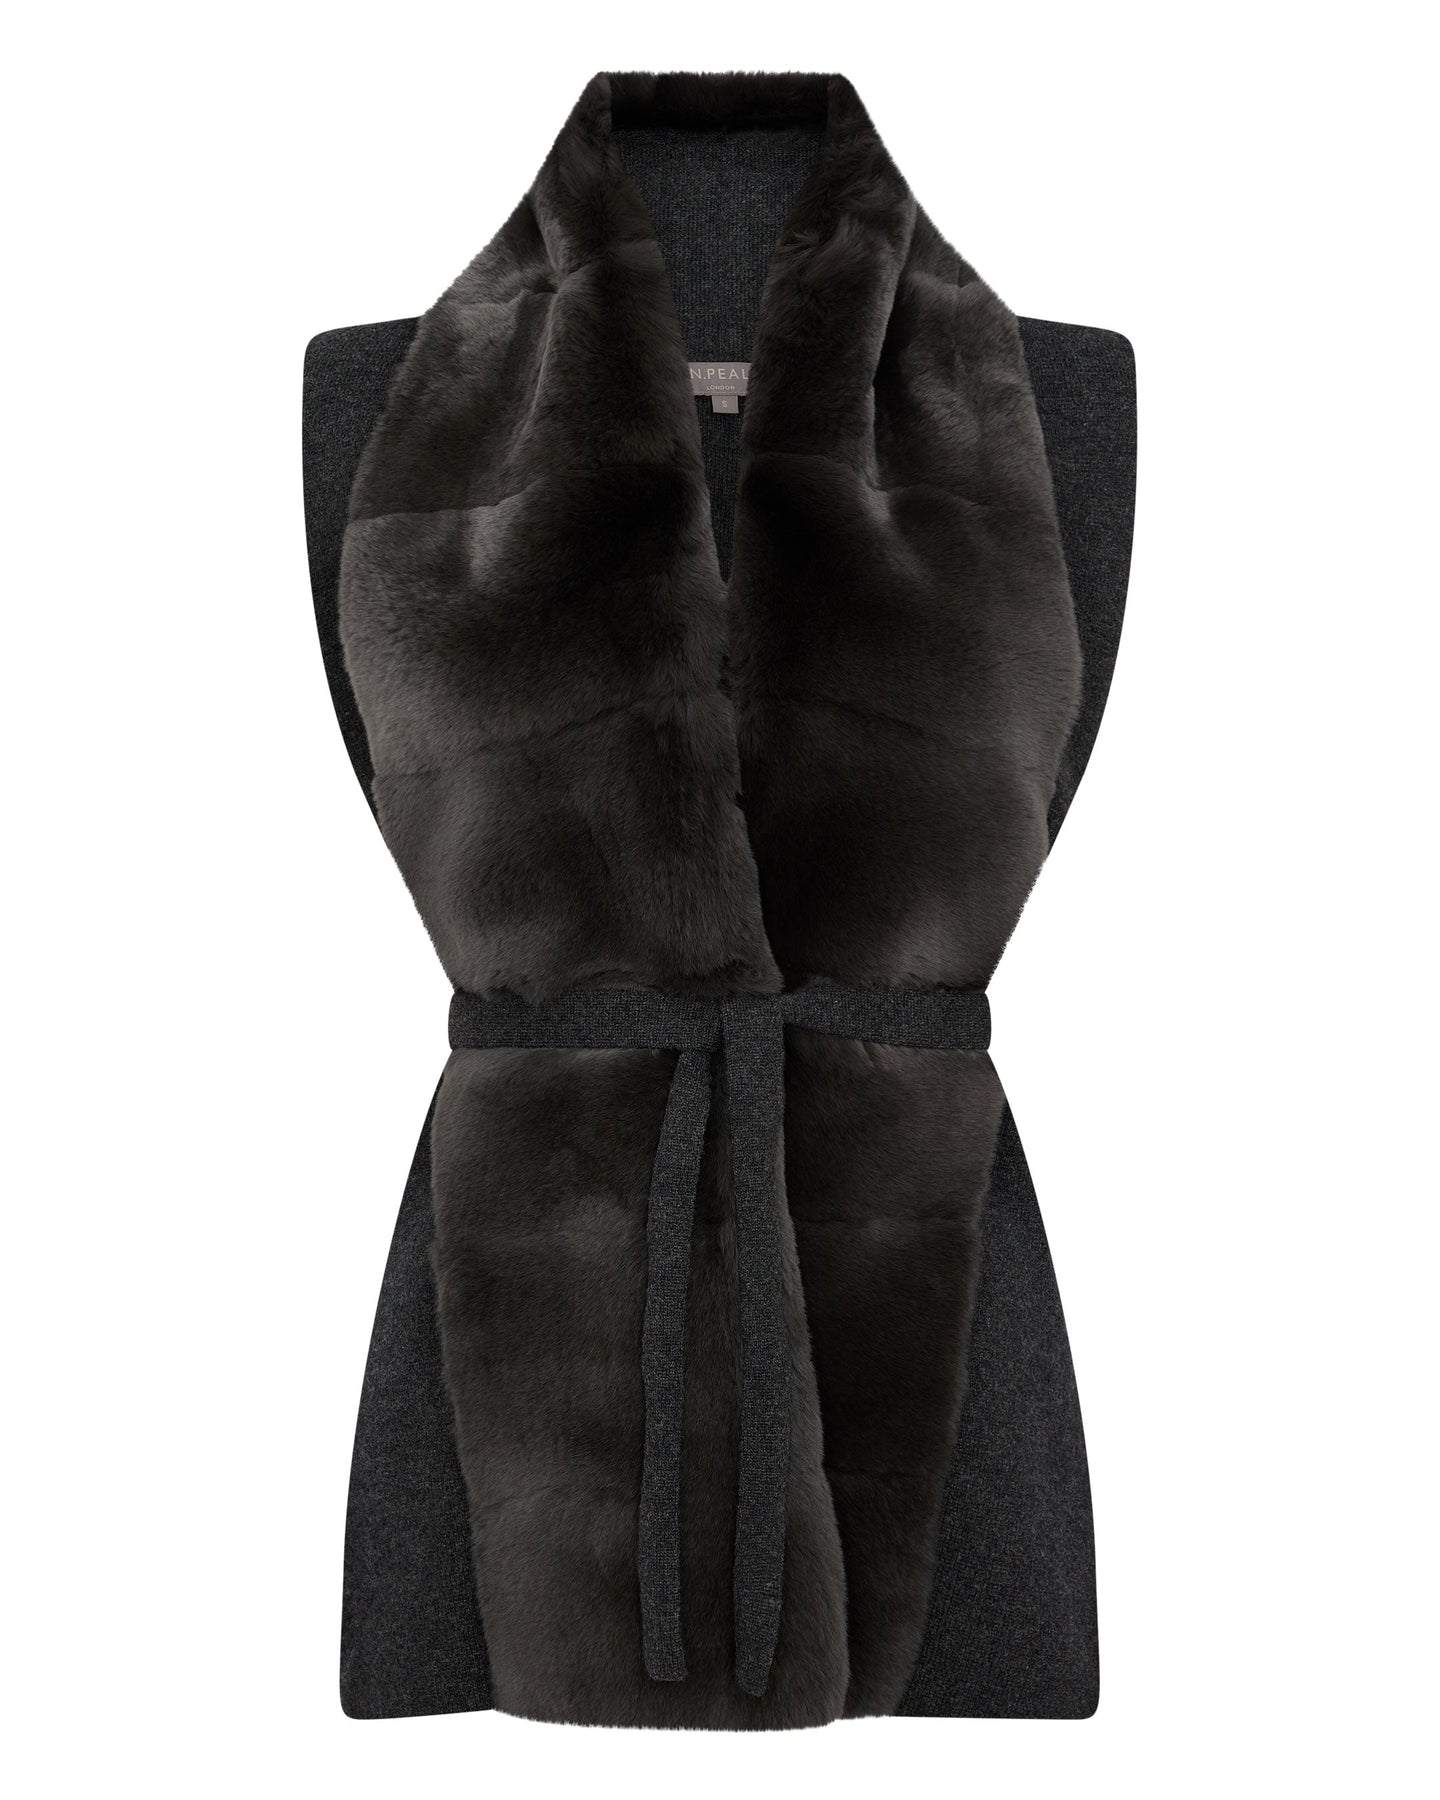 N.Peal Women's Fur Placket Milano Cashmere Gilet Dark Charcoal Grey